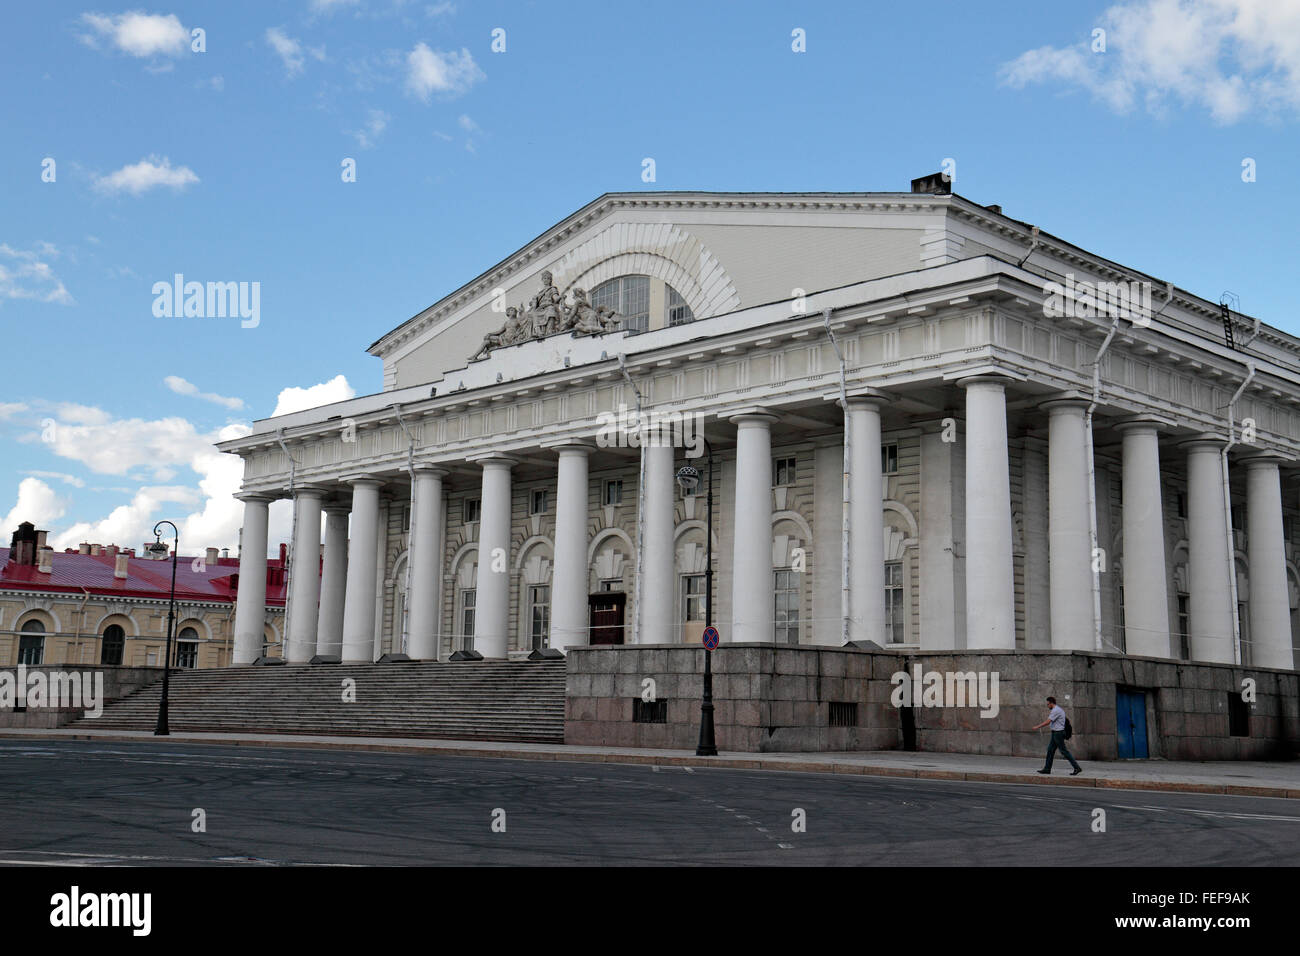 The Old Saint Petersburg Stock Exchange (also Bourse) in St Petersburg, Russia. Stock Photo